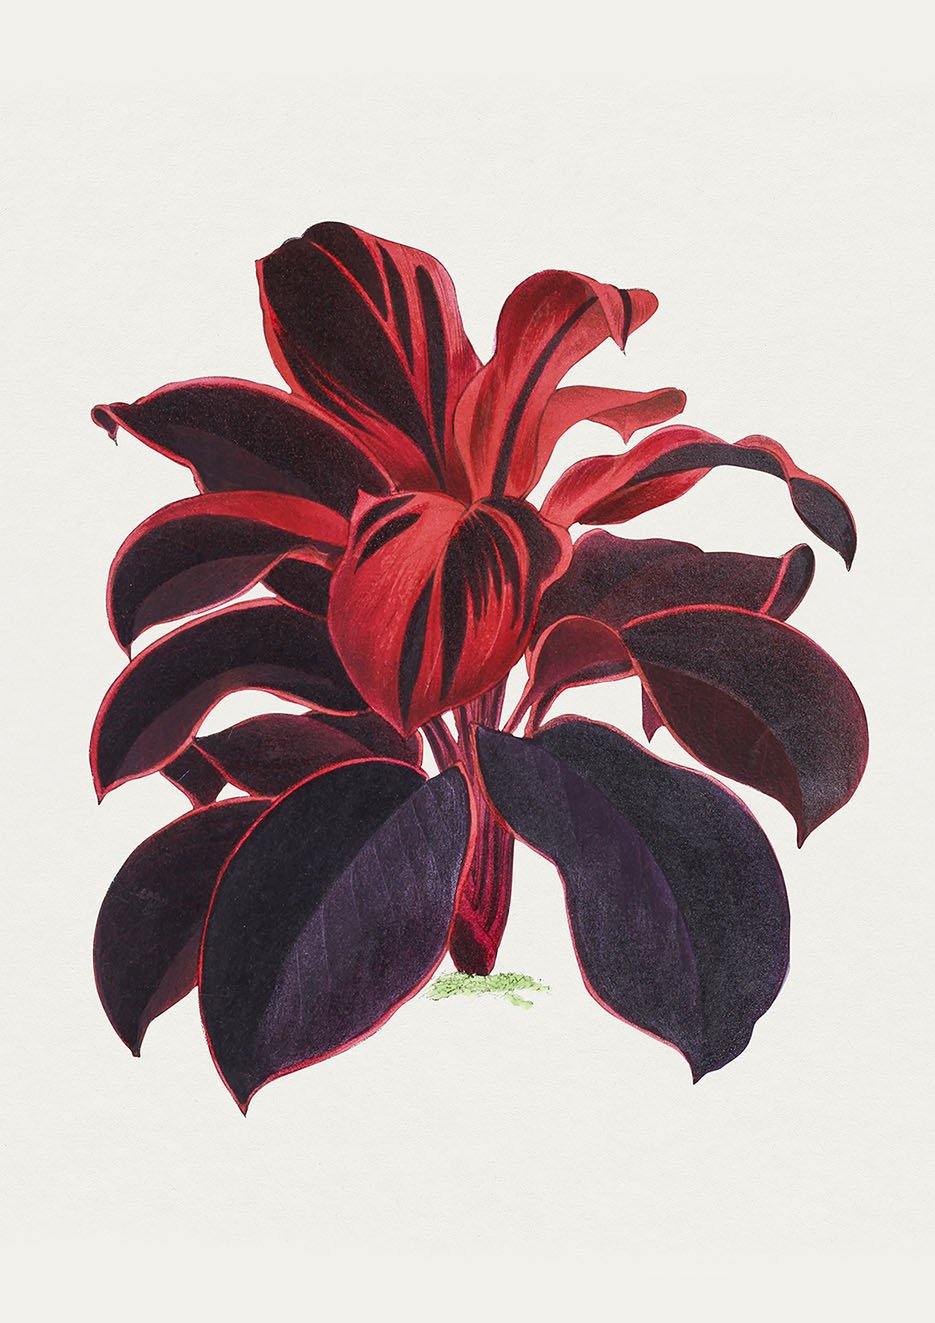 TI PLANT PRINTS: Red Leaf Hawaiian Plant Illustrations - Pimlico Prints